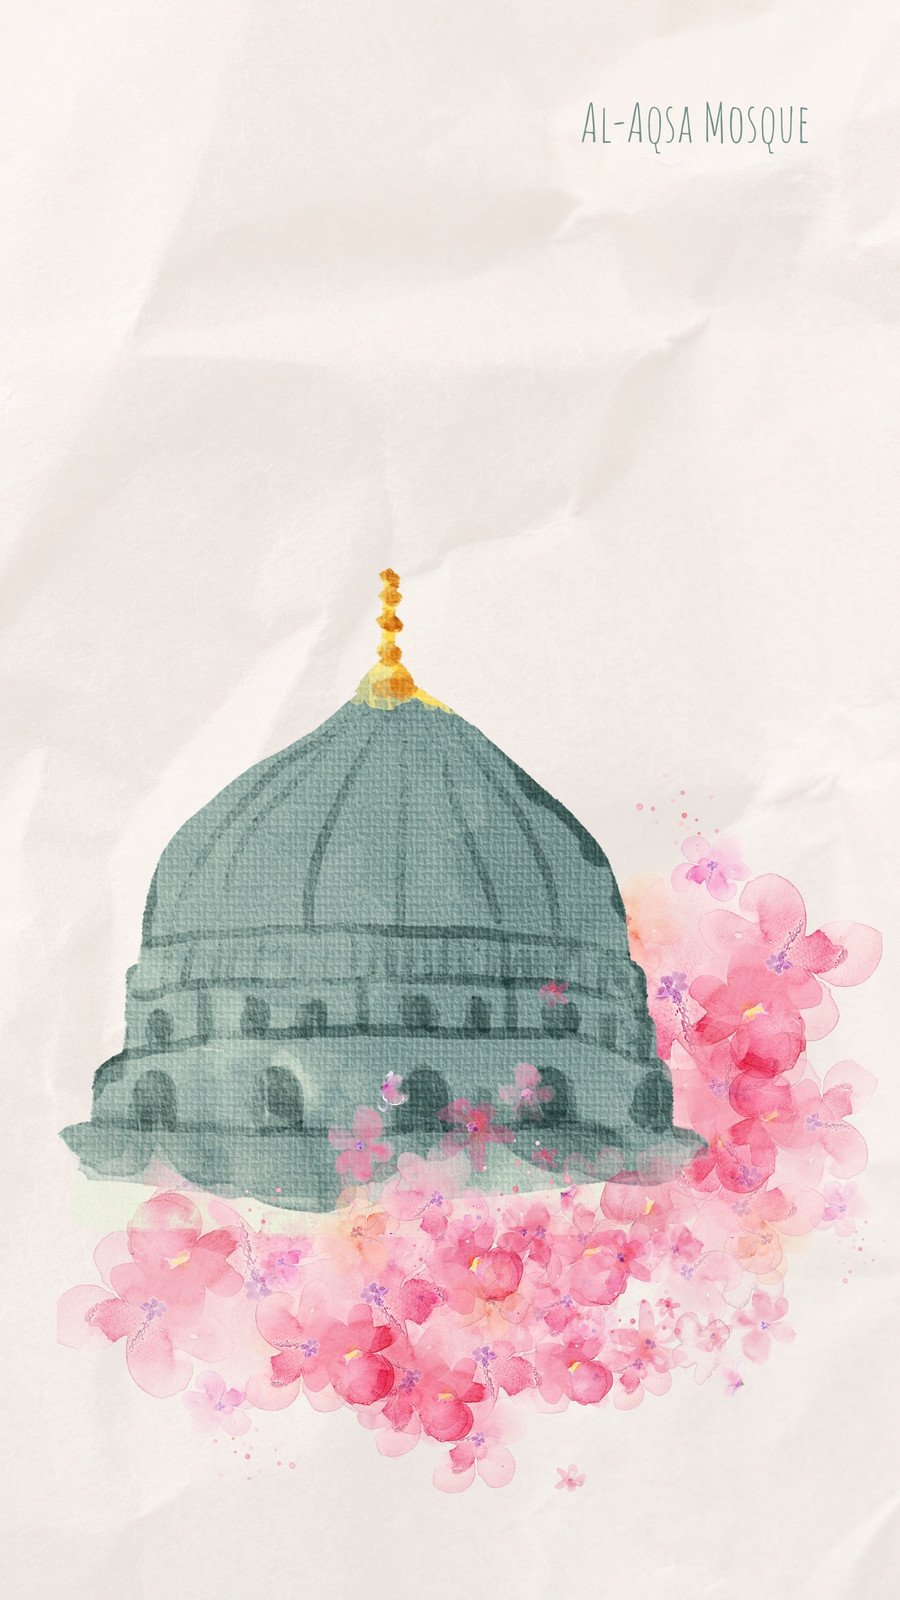 customizable mosque wallpaper